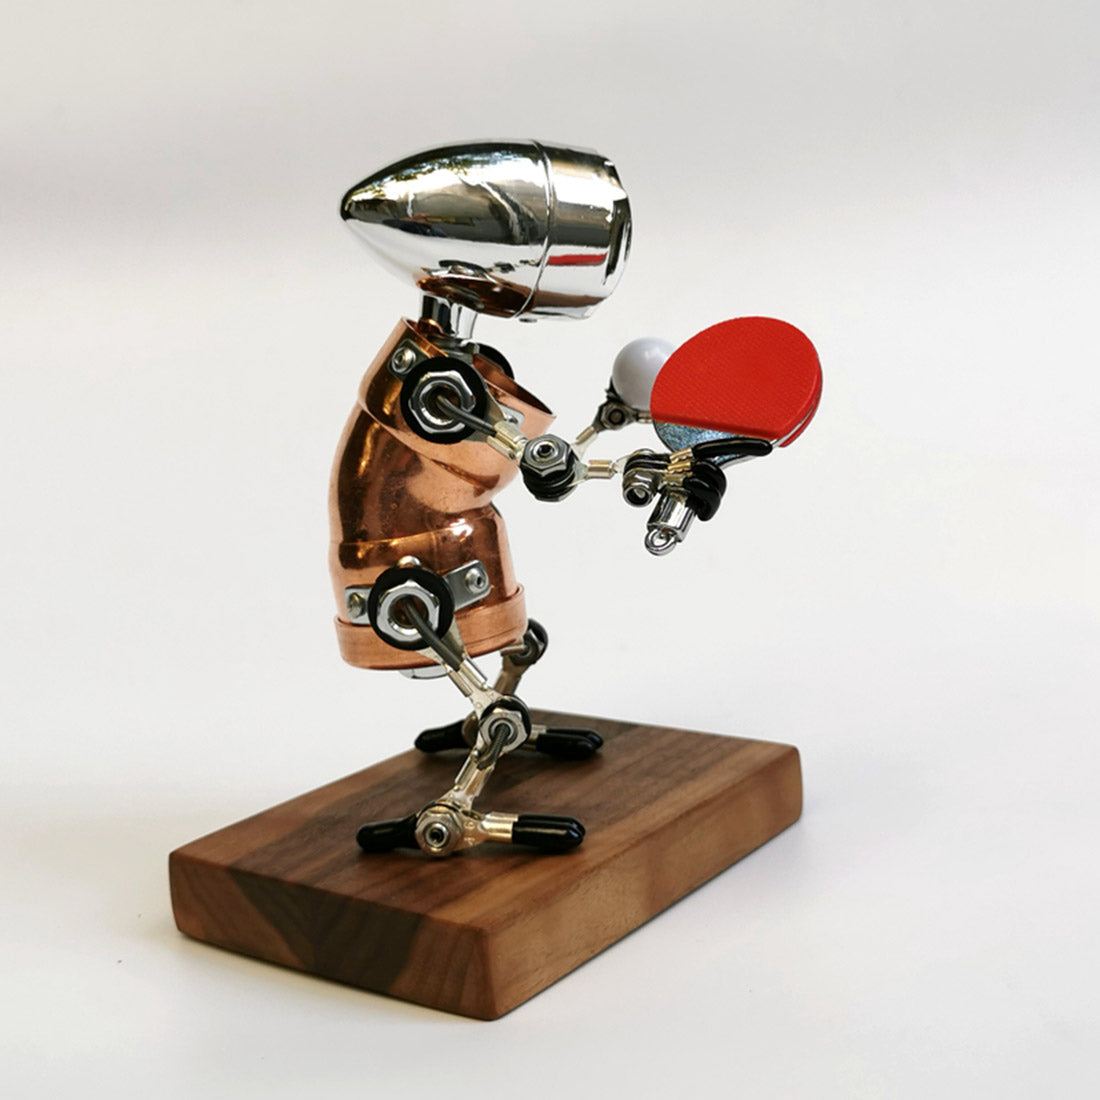 Steampunk Metal Model Robot Table Tennis Player David Night Light Edition